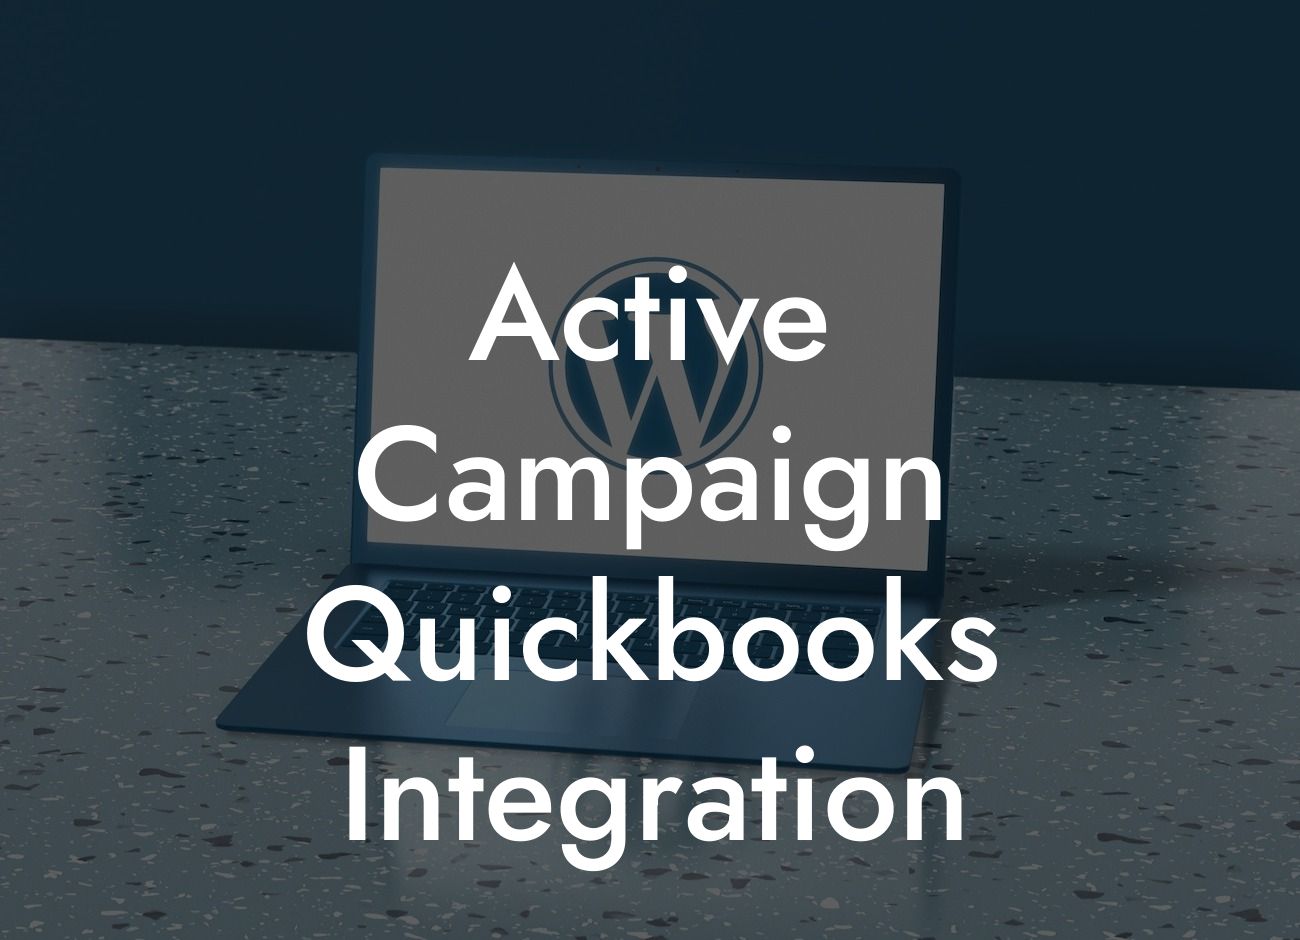 Active Campaign Quickbooks Integration